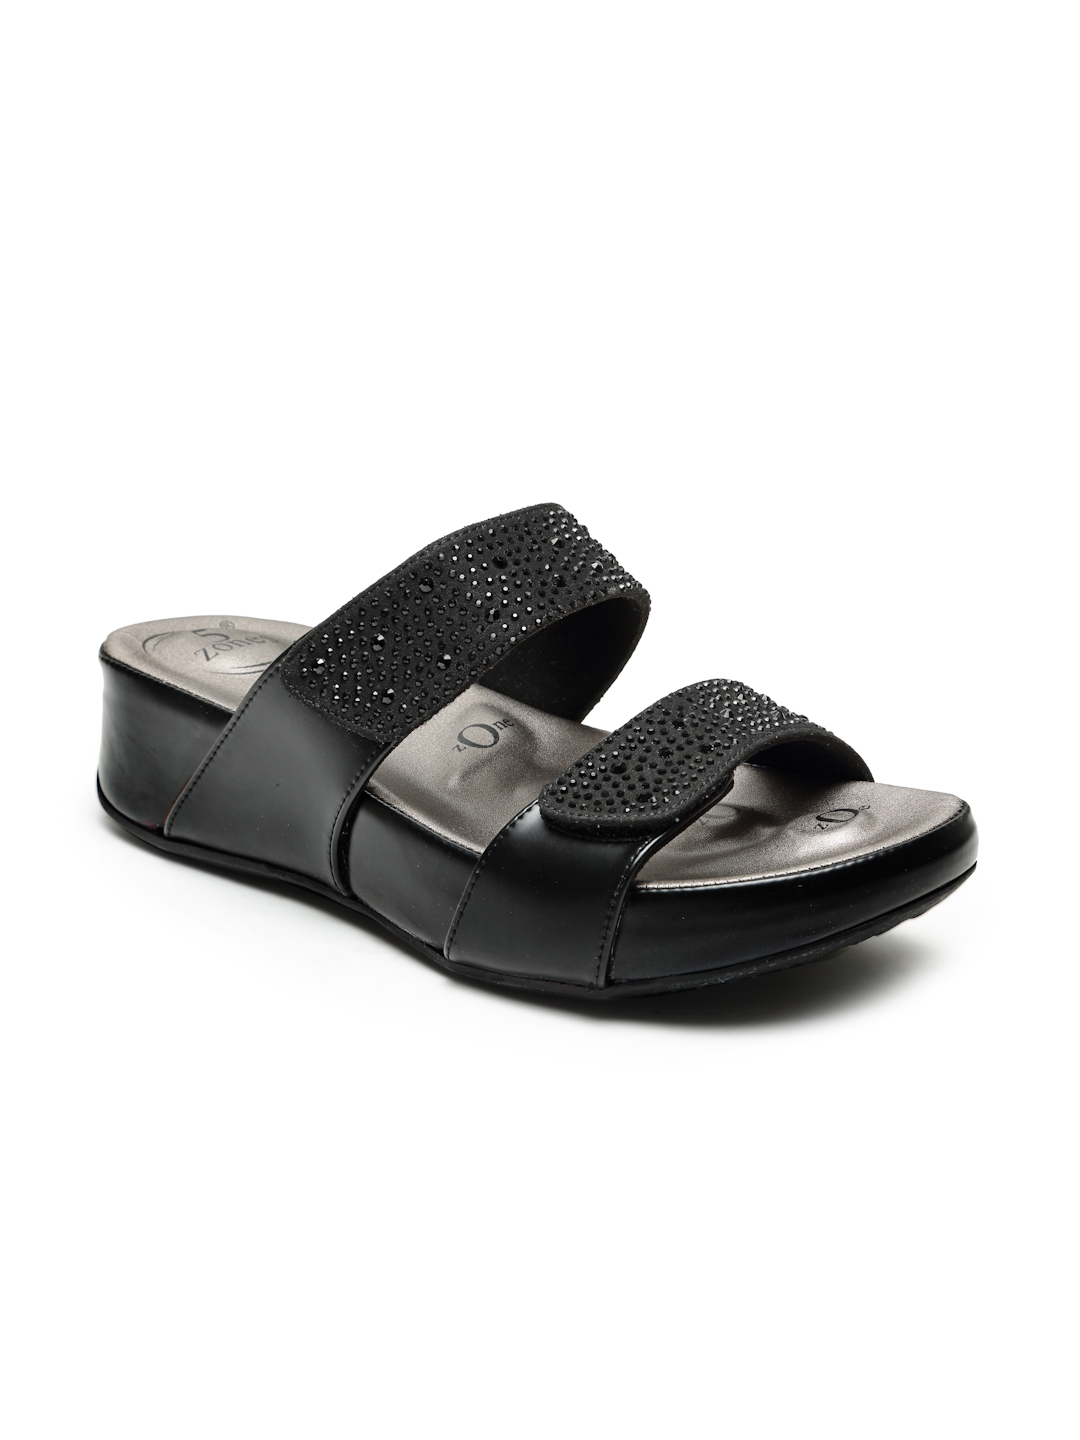 VON WELLX GERMANY comfort women's black casual sandals PAULA